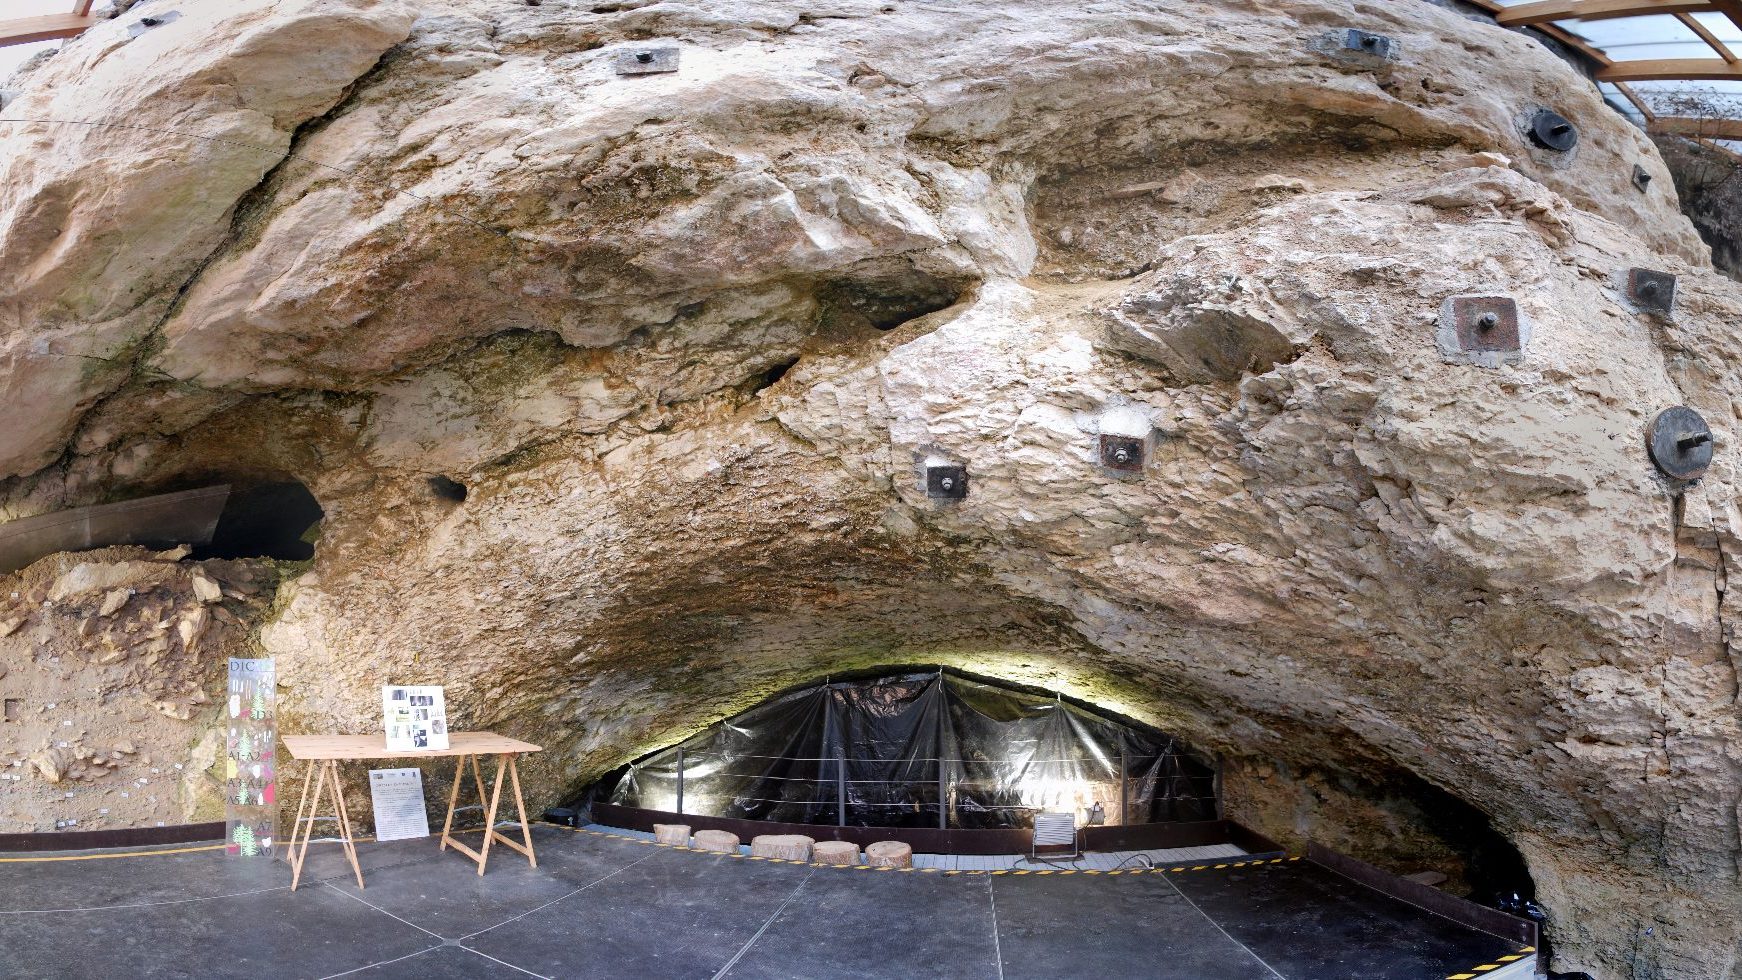 Grotta di Fumane: trent’anni di grandi scoperte su Neandertal e Sapiens